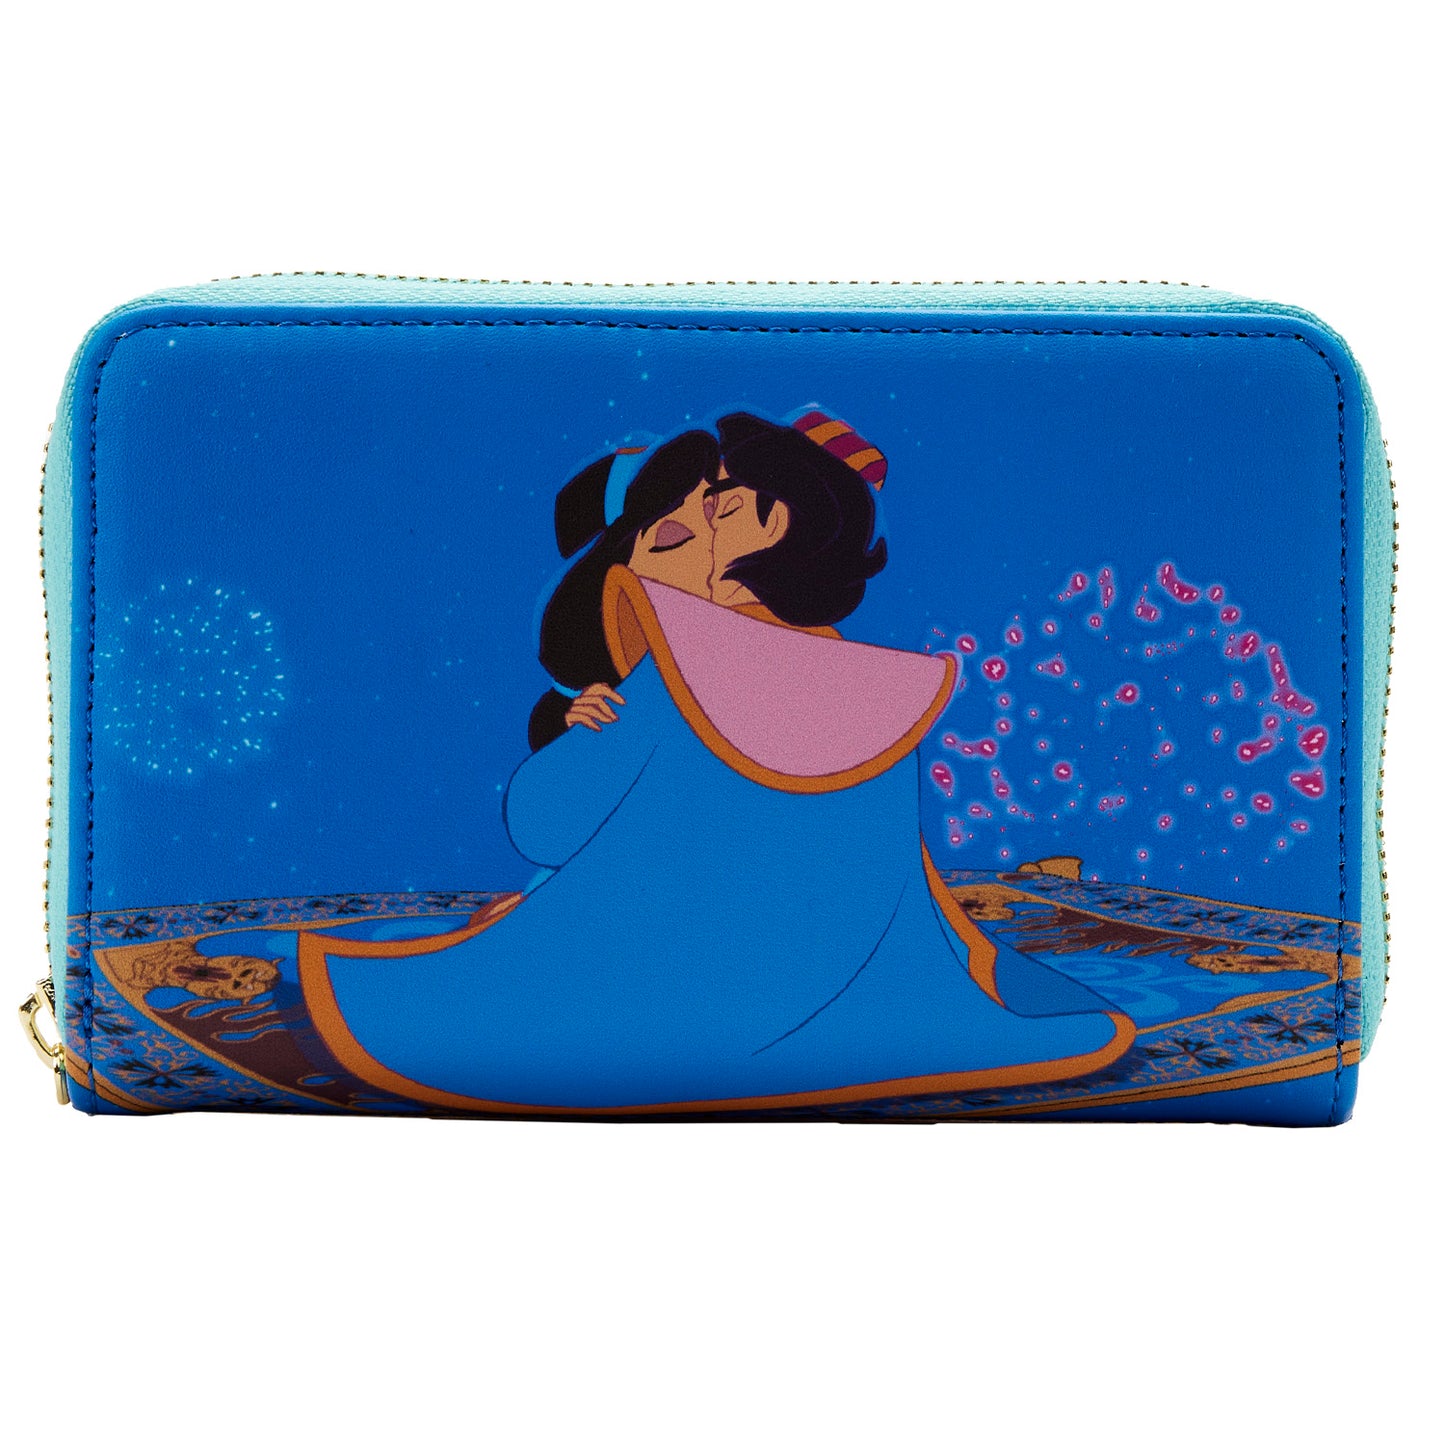 Loungefly Disney Jasmine Princess Series Zip-Around Wallet